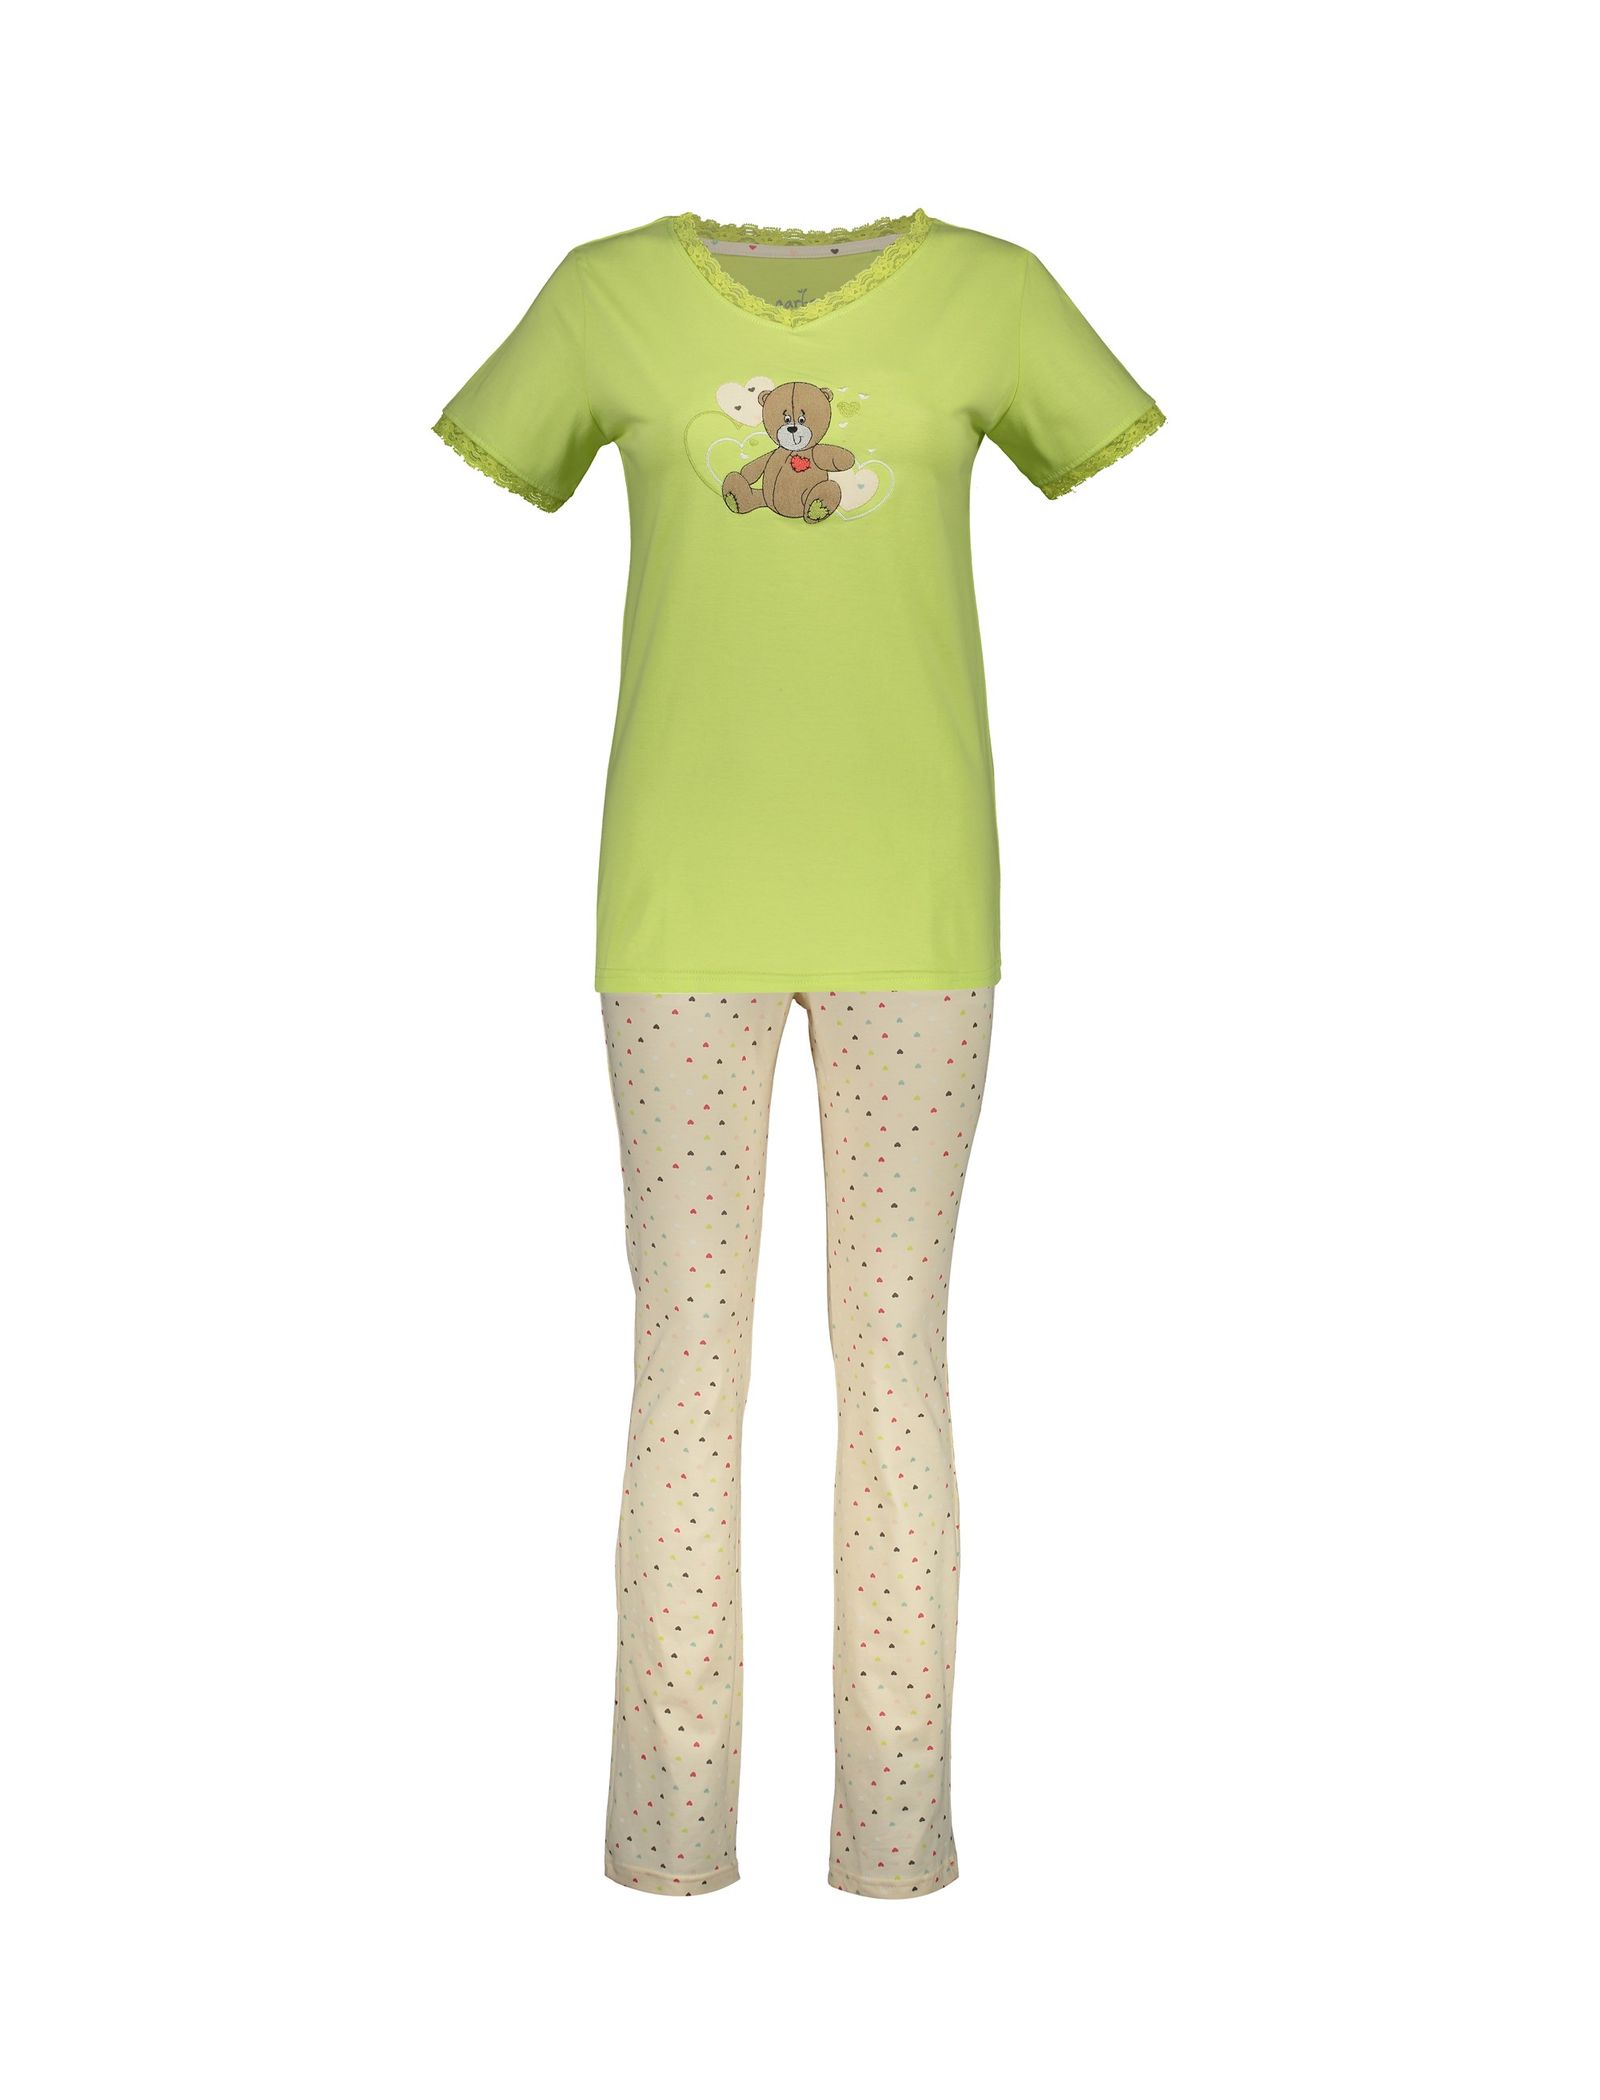 تی شرت و شلوار نخی زنانه خرس مهربان - ناربن - سبز - 11